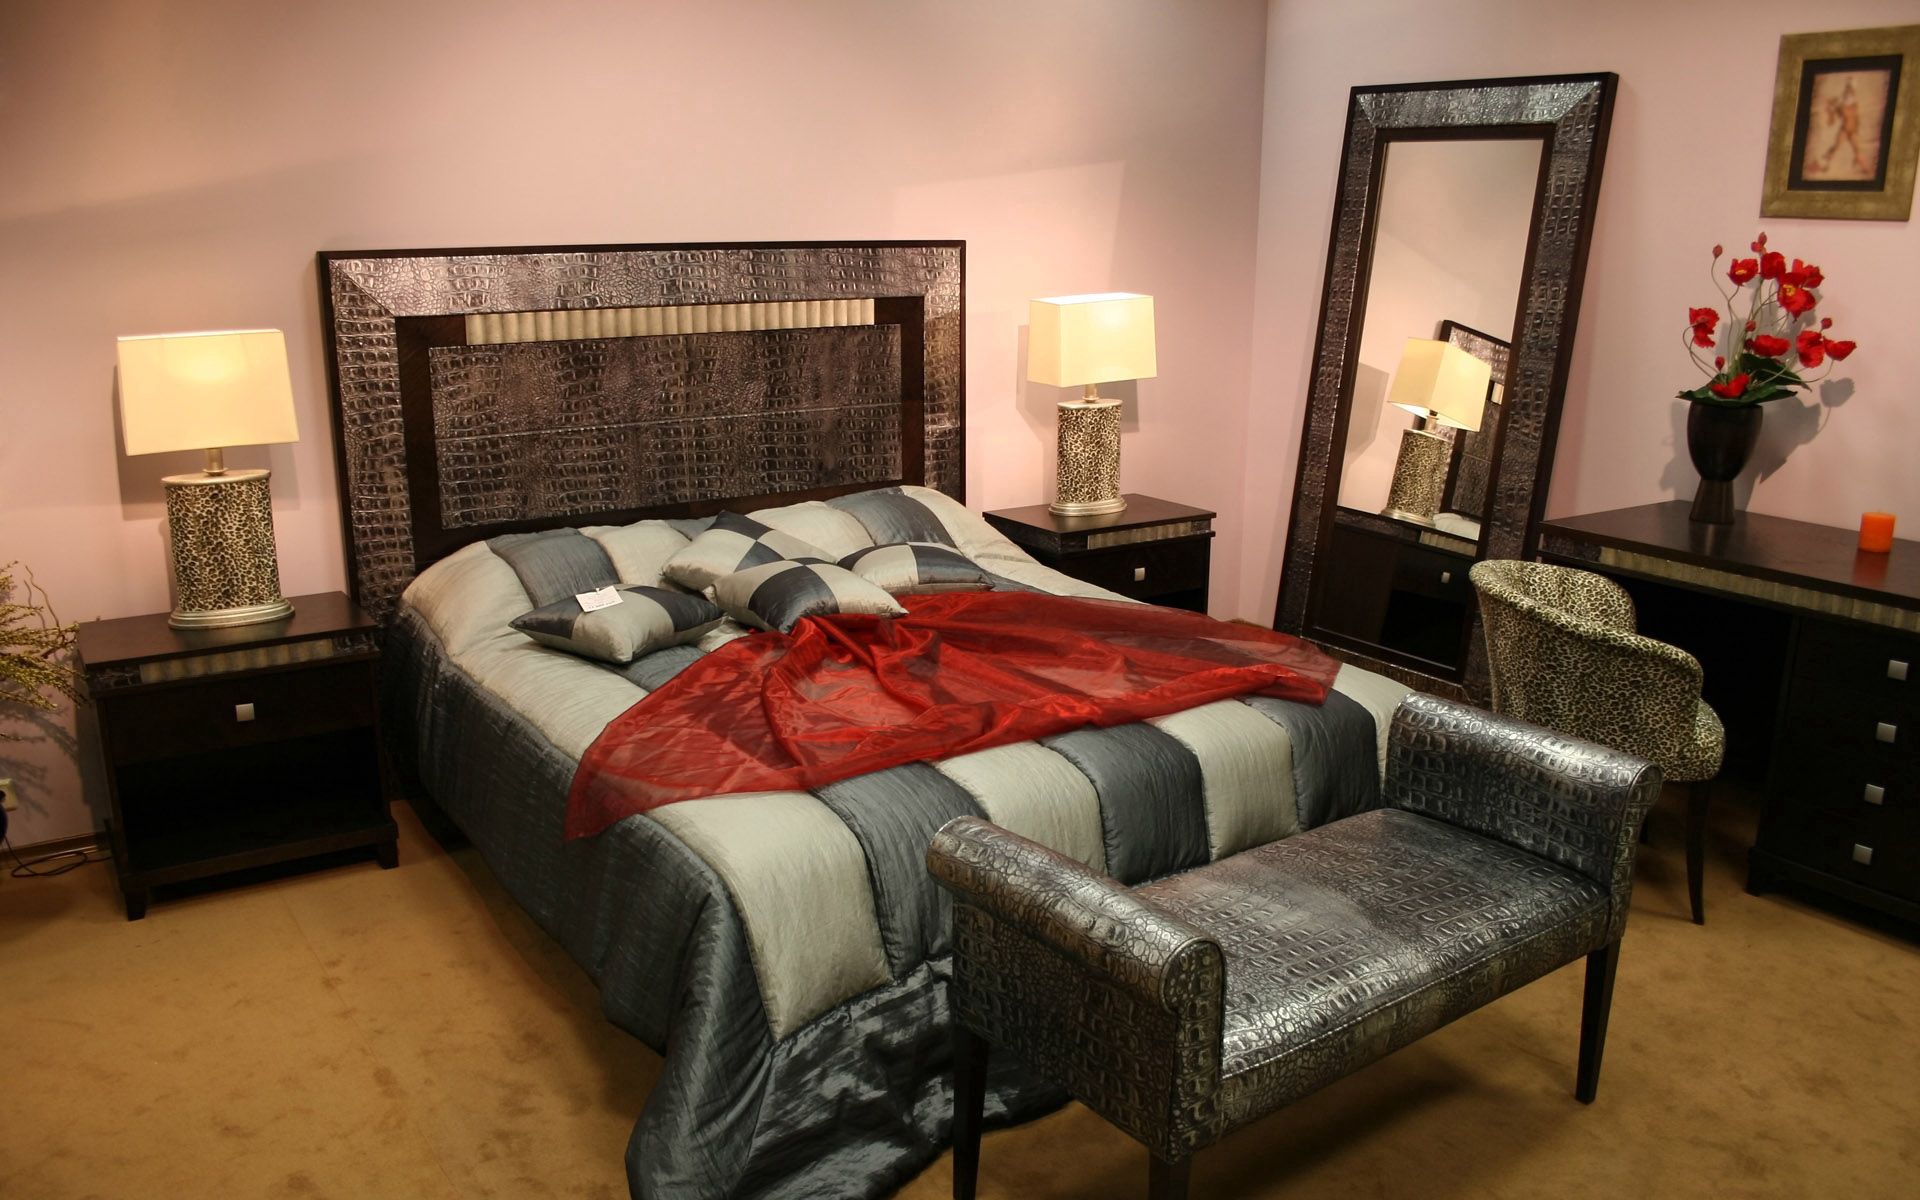 interior, miscellanea, miscellaneous, style, bed, coziness, comfort, sleeping, bedroom UHD